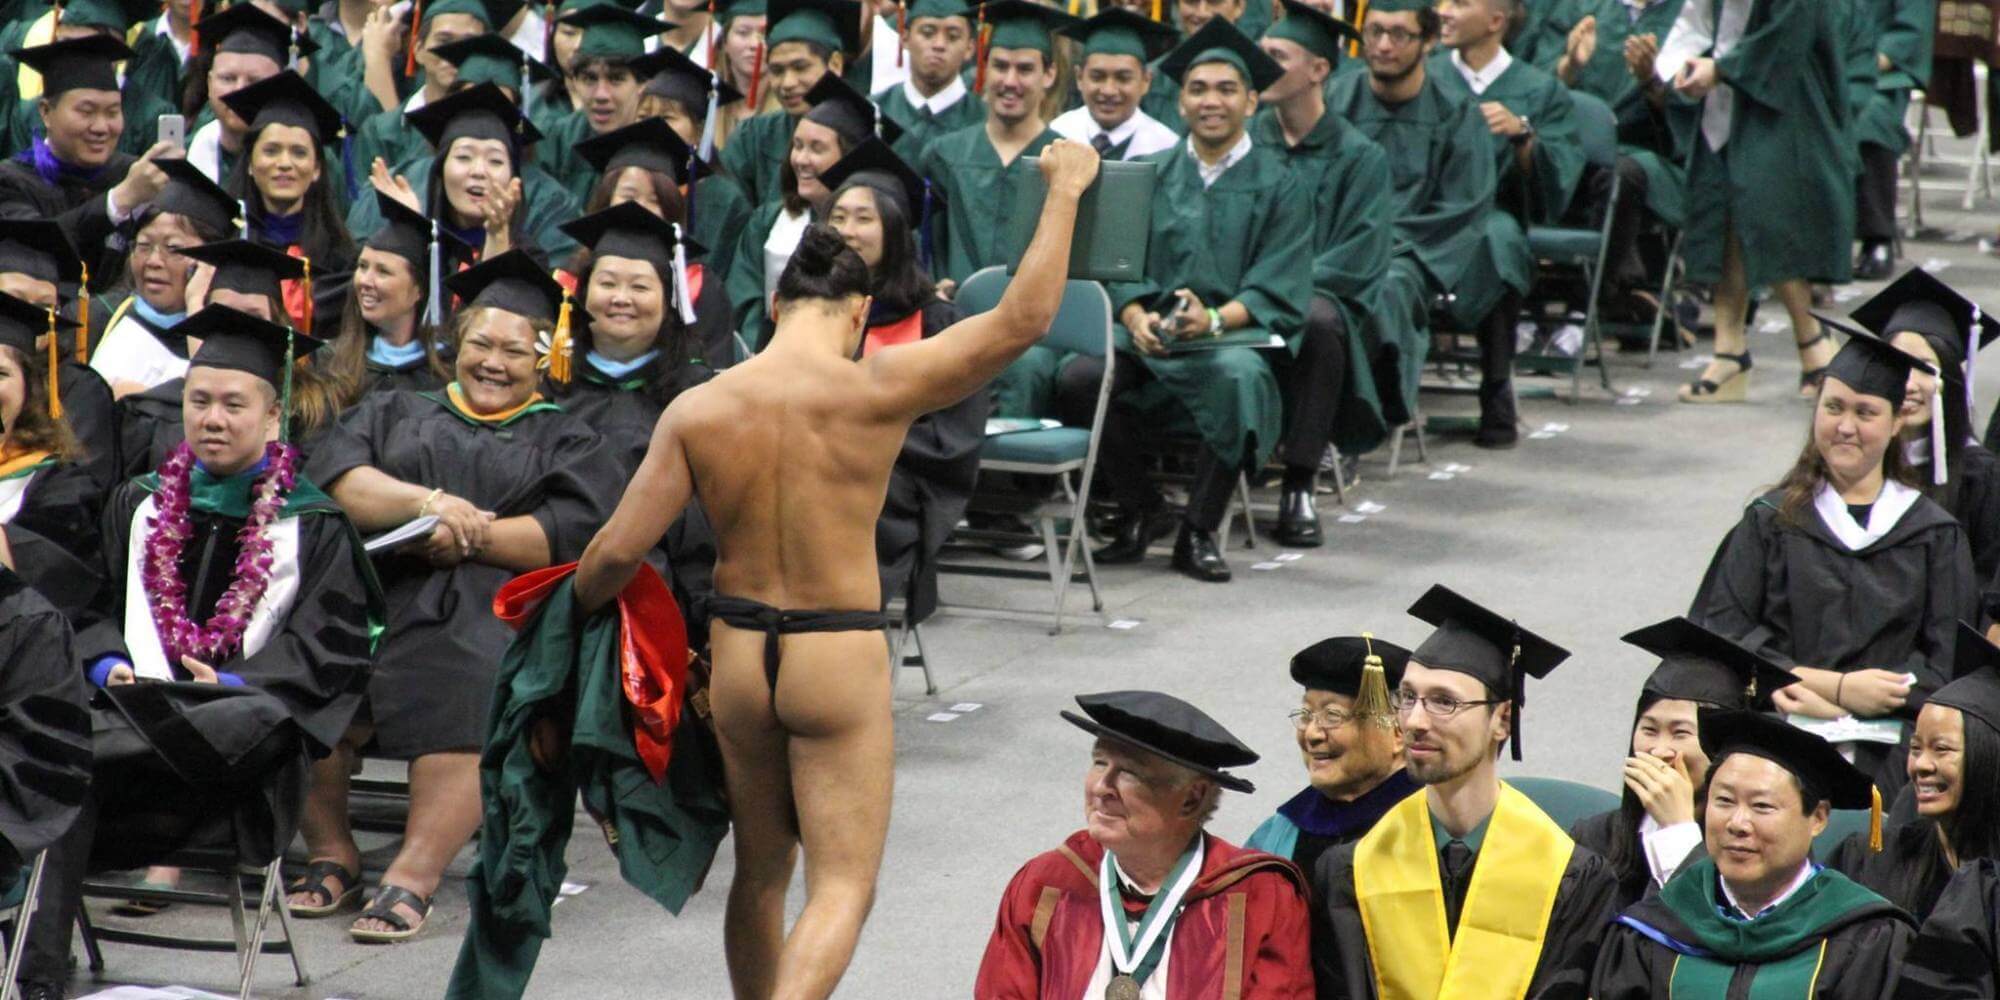 naked graduation student.